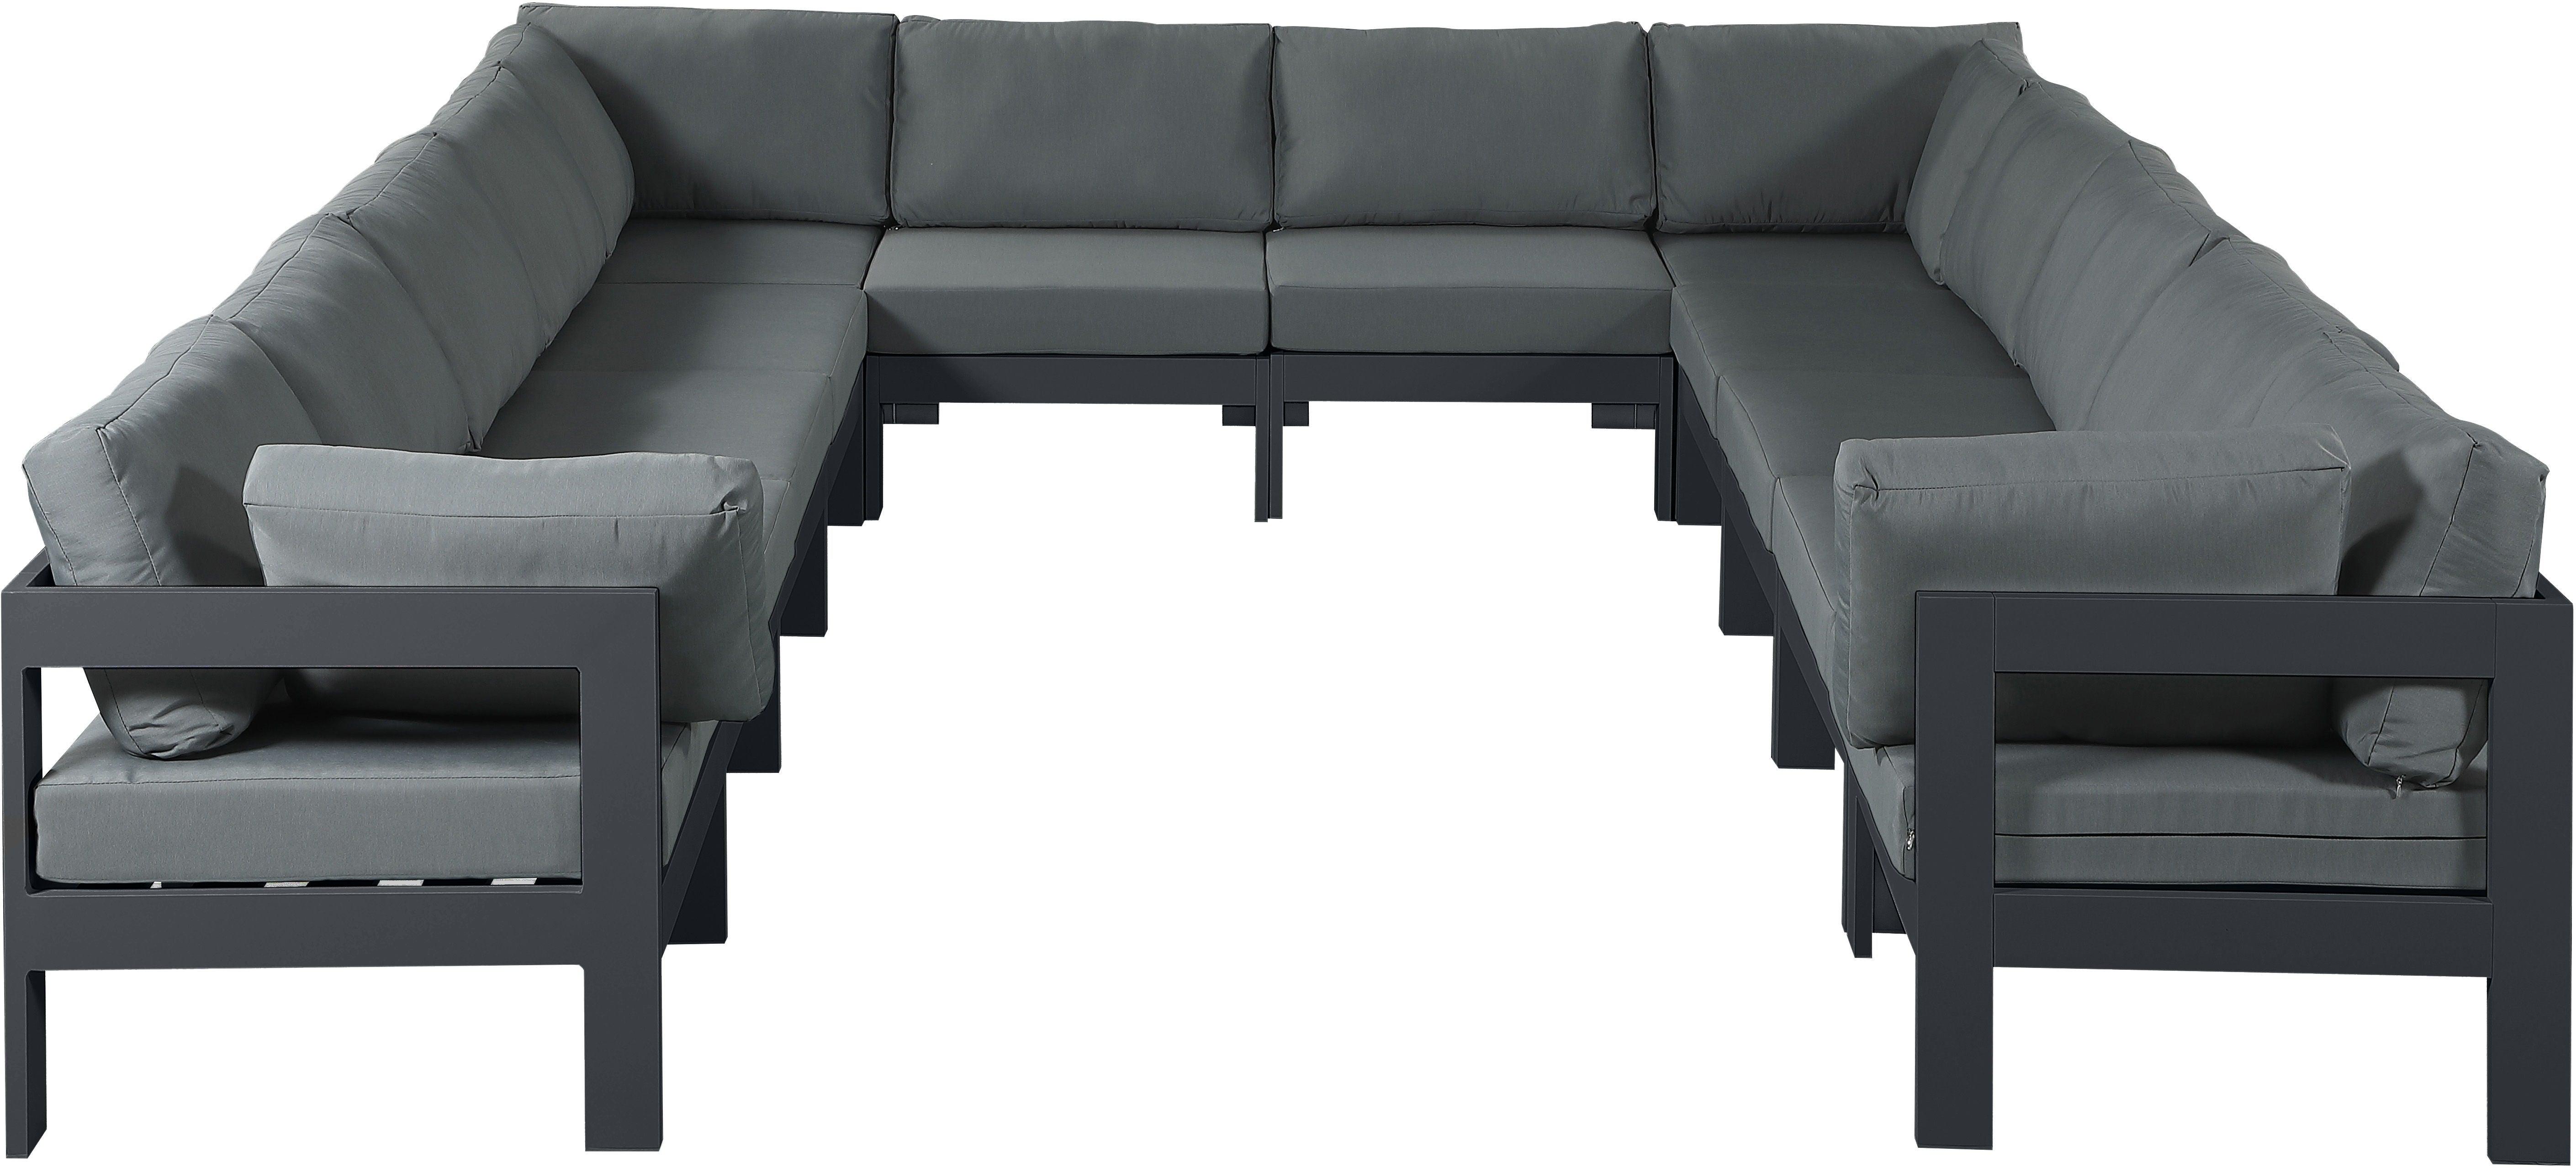 Meridian Furniture - Nizuc - Outdoor Patio Modular Sectional 12 Piece - Grey - 5th Avenue Furniture